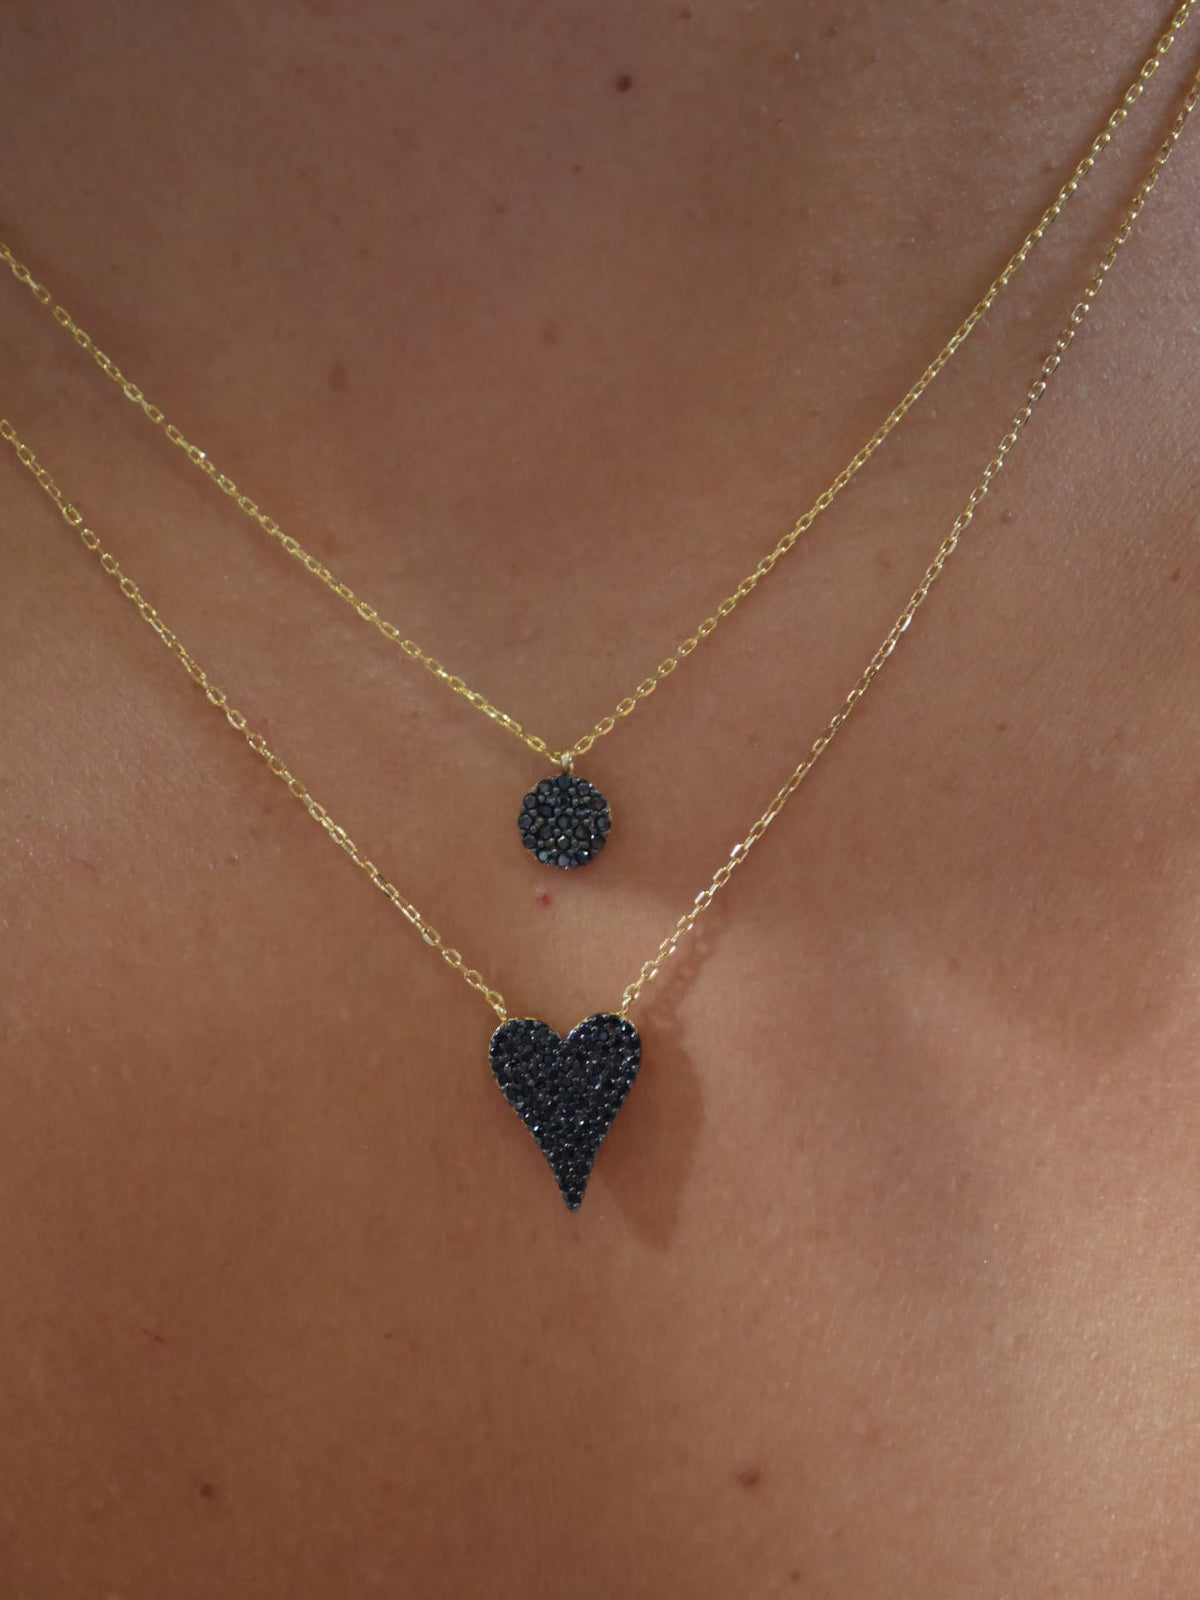 Black-Diamond-Heart-Necklace-CZ-Sterling-Silver-Rhinestone-Miami-trending-popular-gold-black-necklace-men-women-kids-Kesley-Boutique-Treding-Jewelry-Reels-intasgram-tik-tok-brands-top-necklaces-gifts-ideas